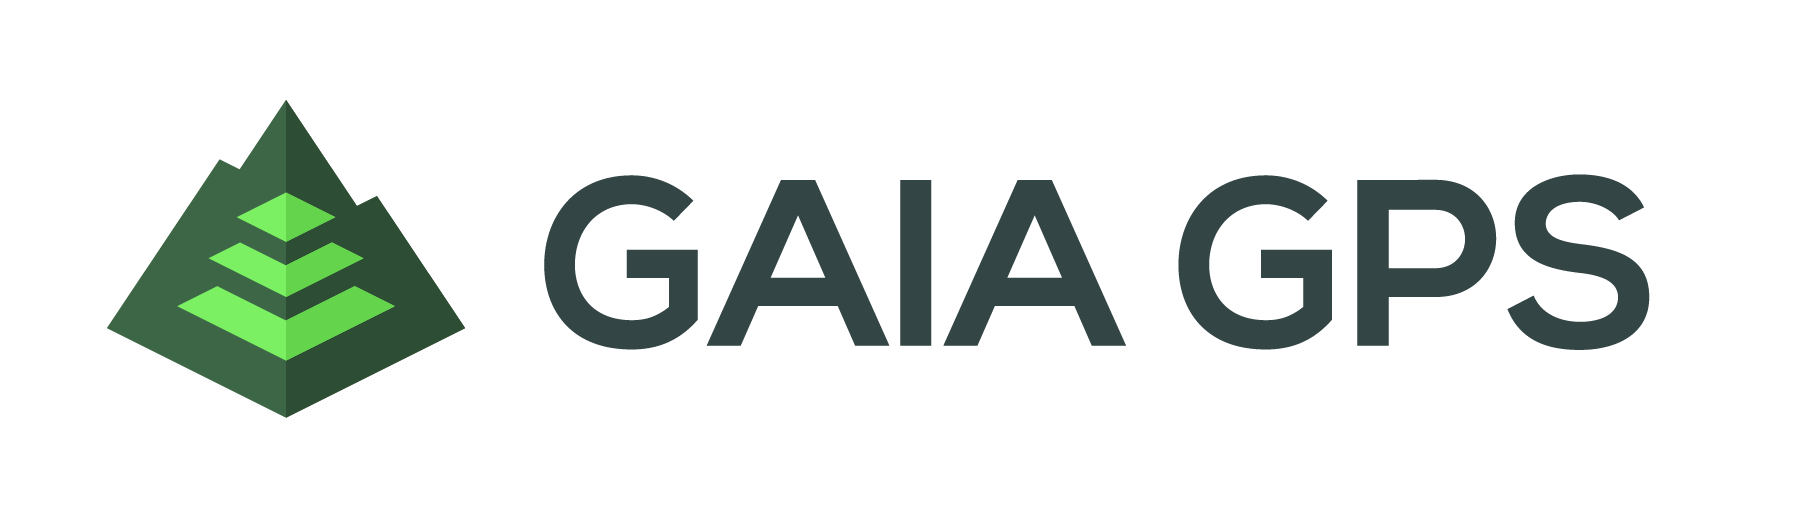 Gaia GPS logo